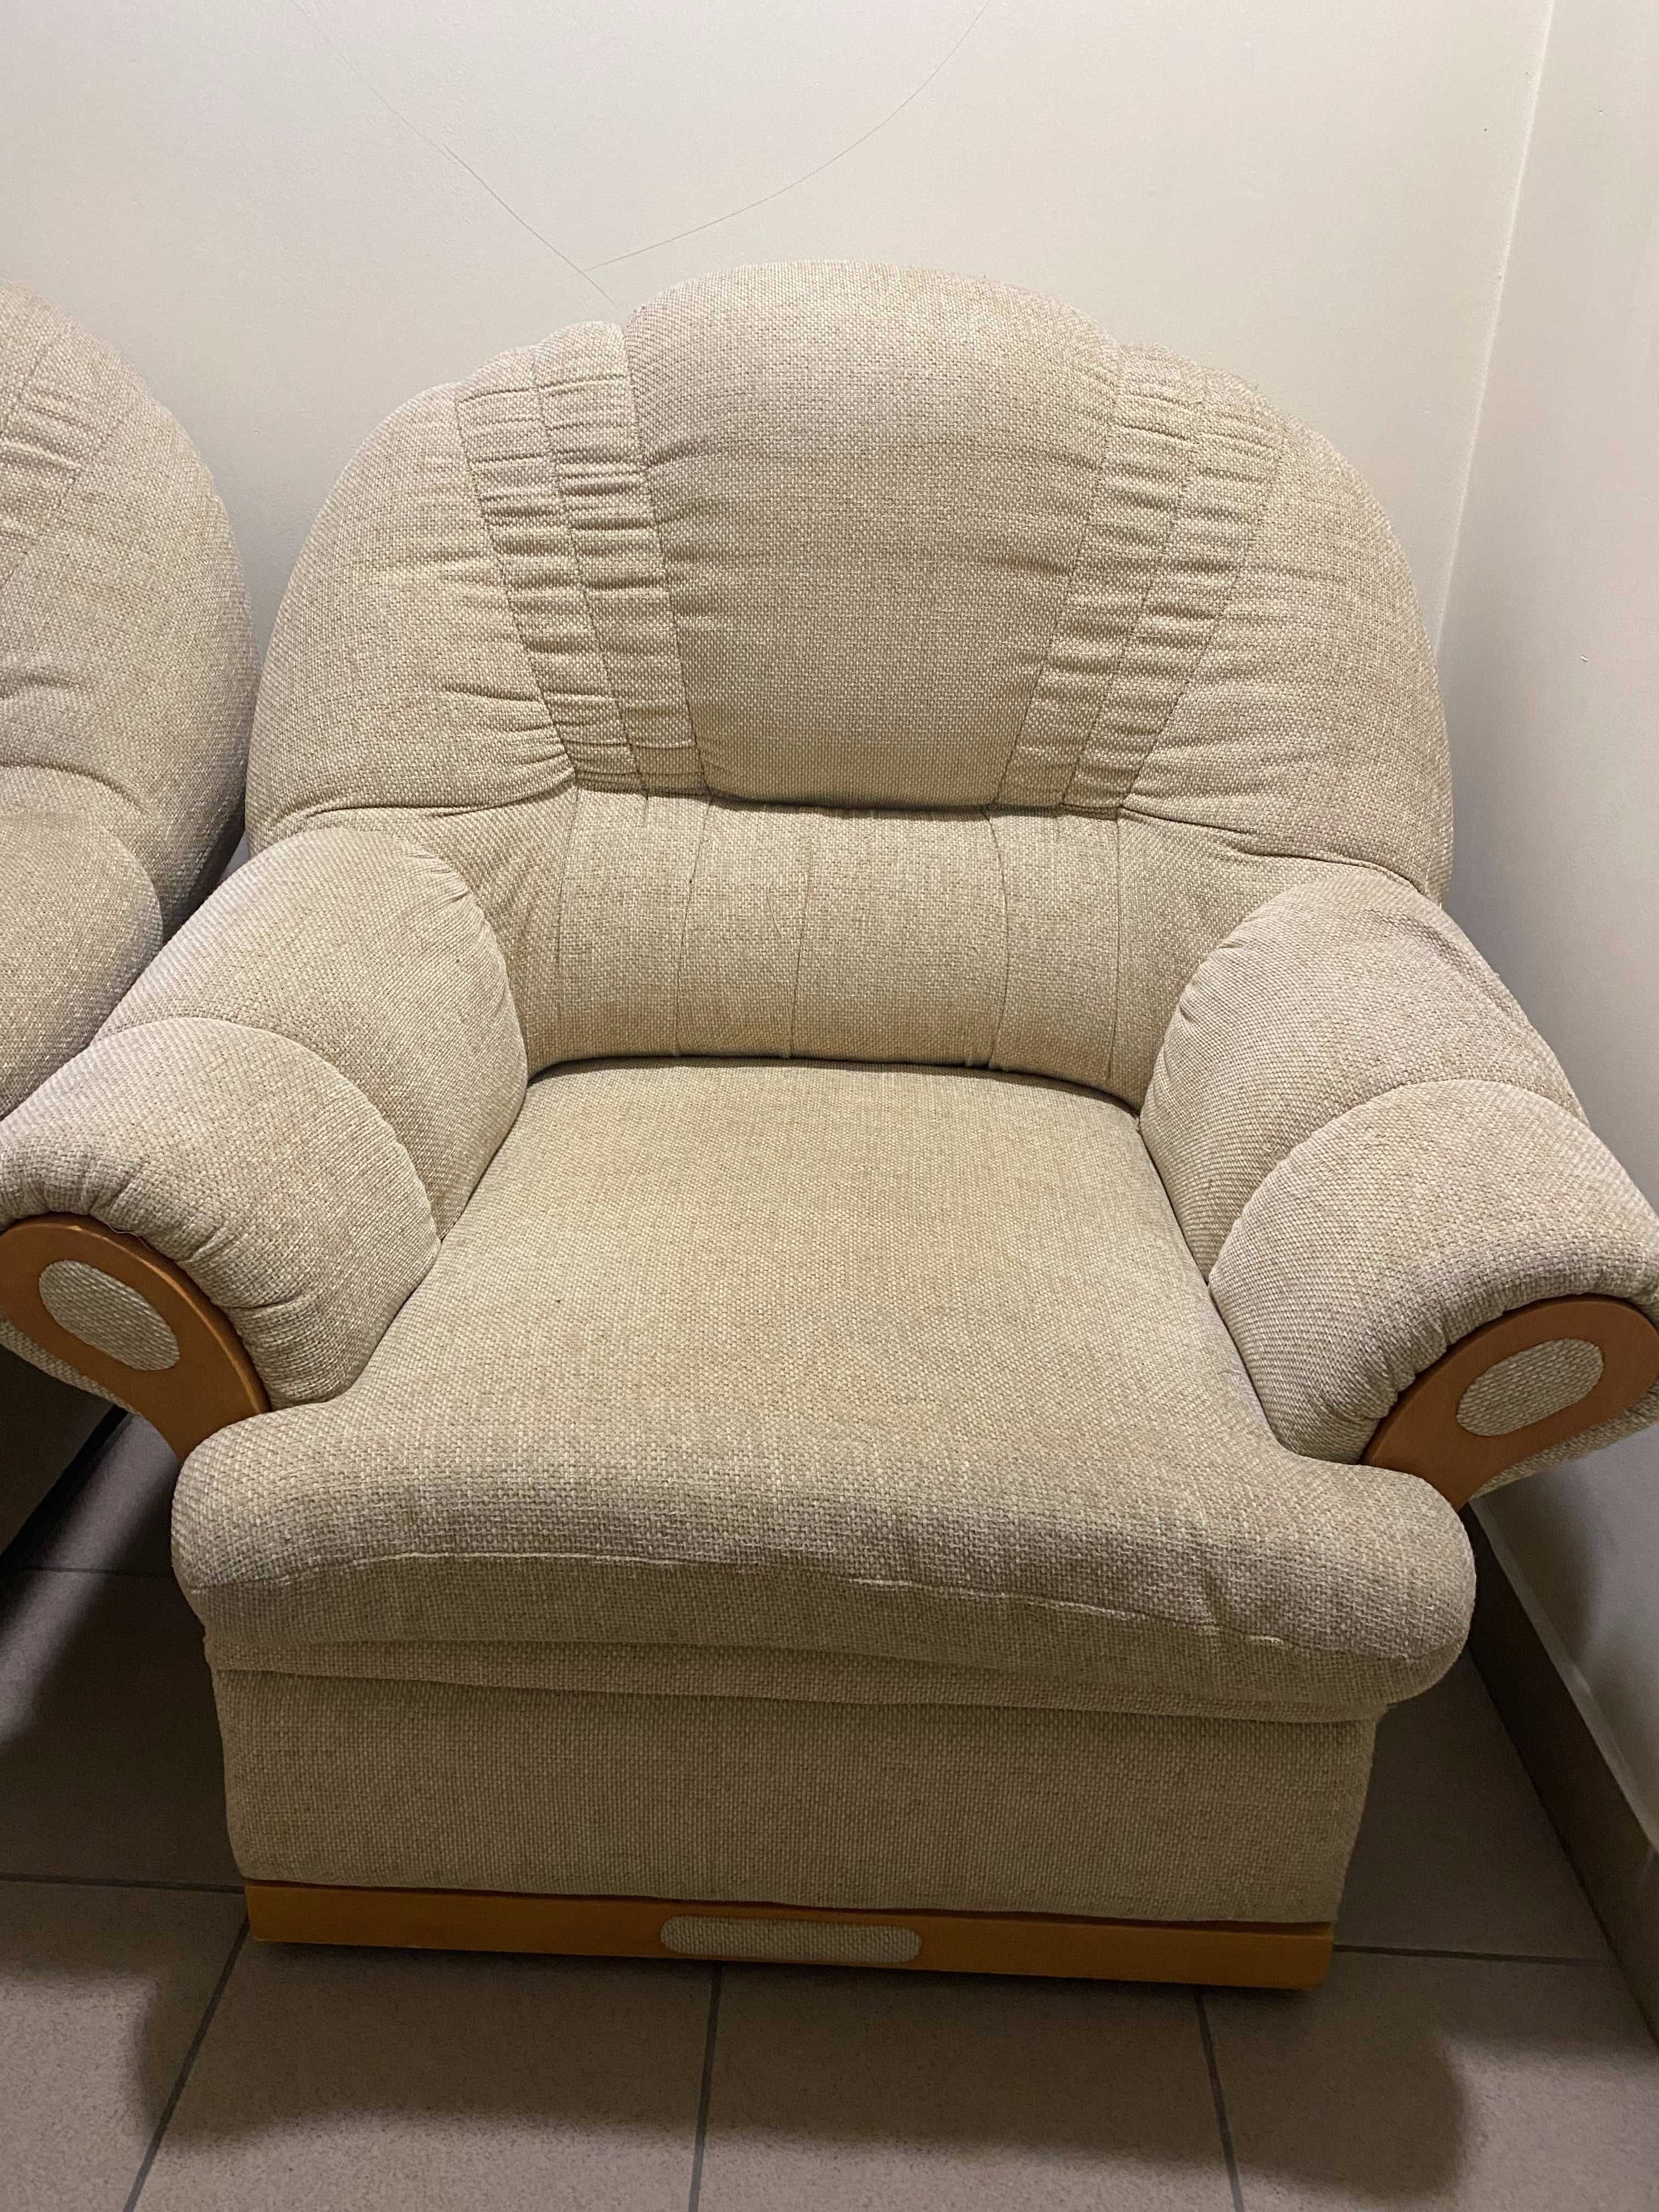 Sofa z fotelem - materiałowe